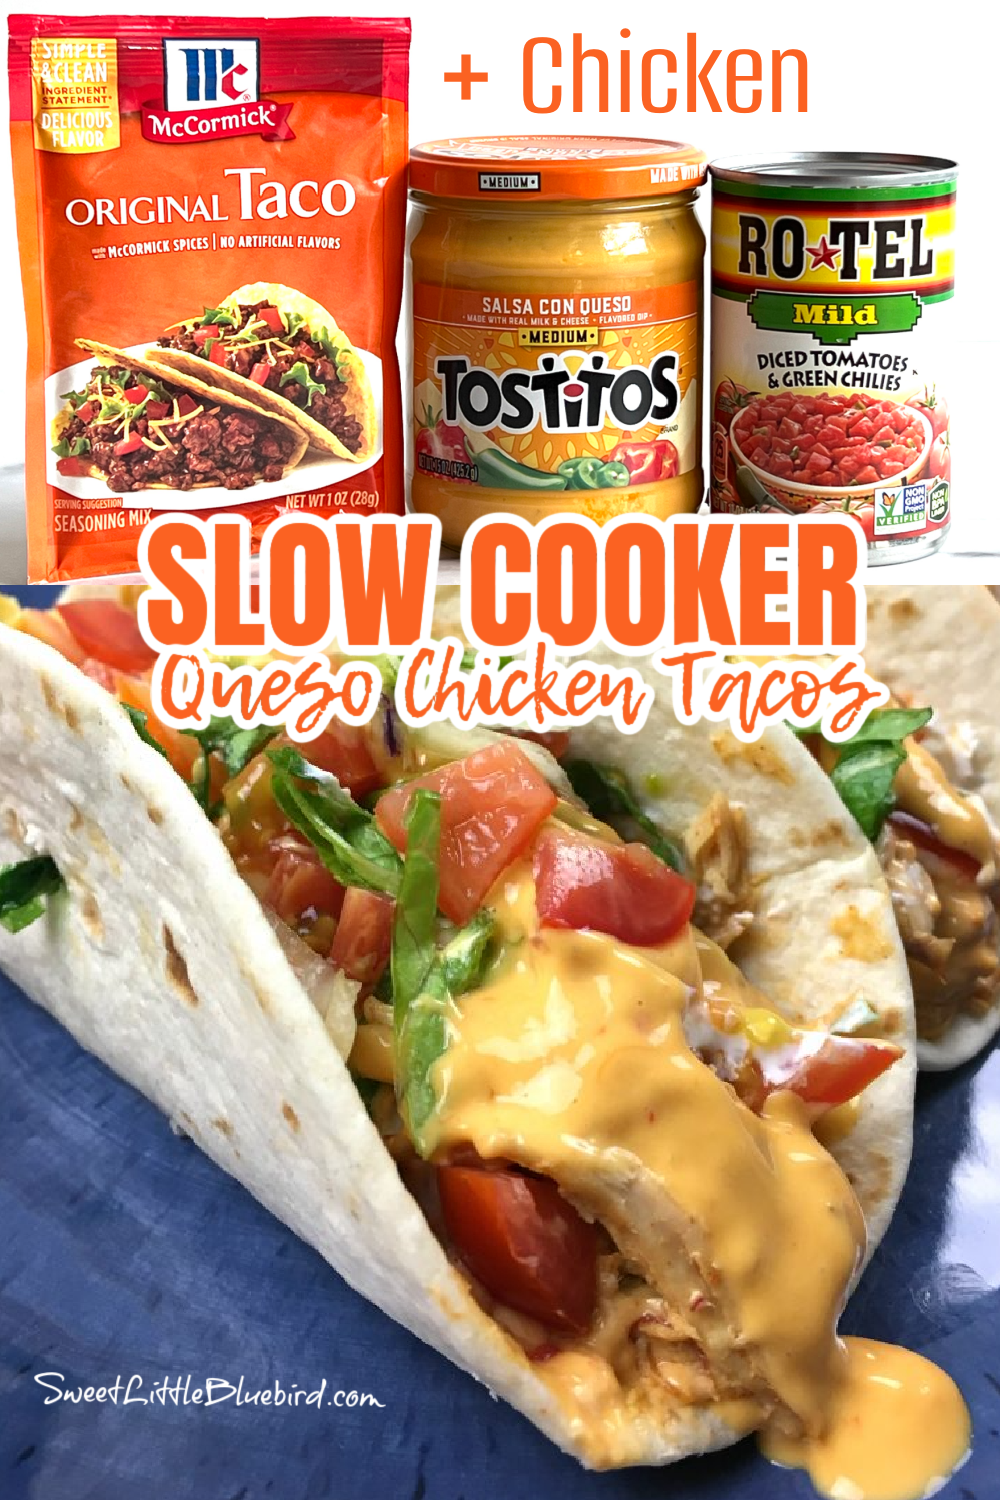 https://sweetlittlebluebird.com/wp-content/uploads/Slow-Cooker-Queso-Chicken-Tacos-NEW-3-23-.png